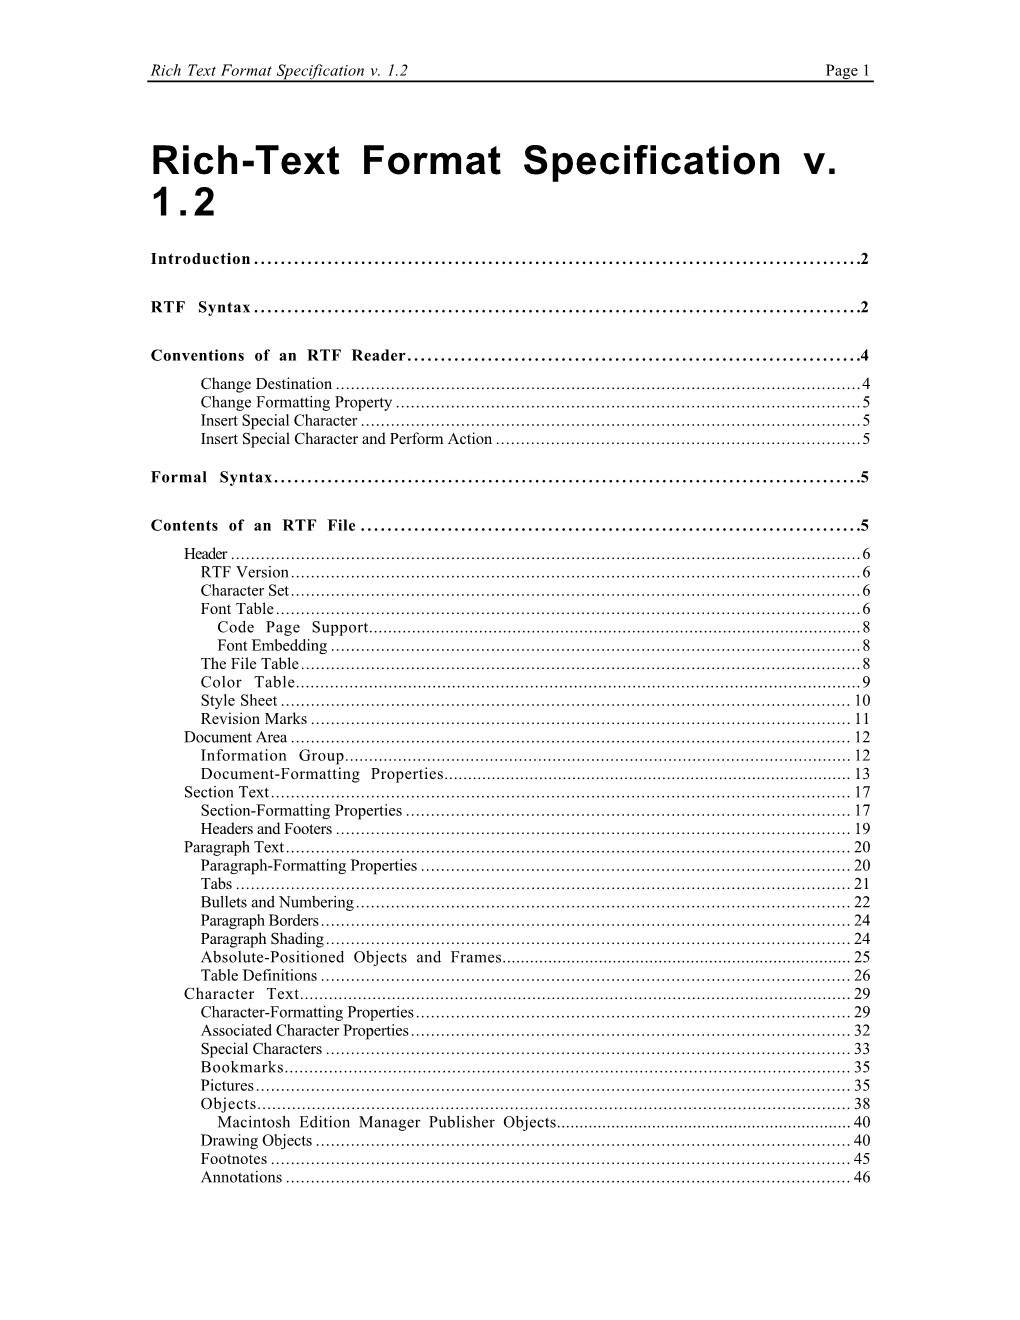 Rich-Text Format Specification V. 1.2